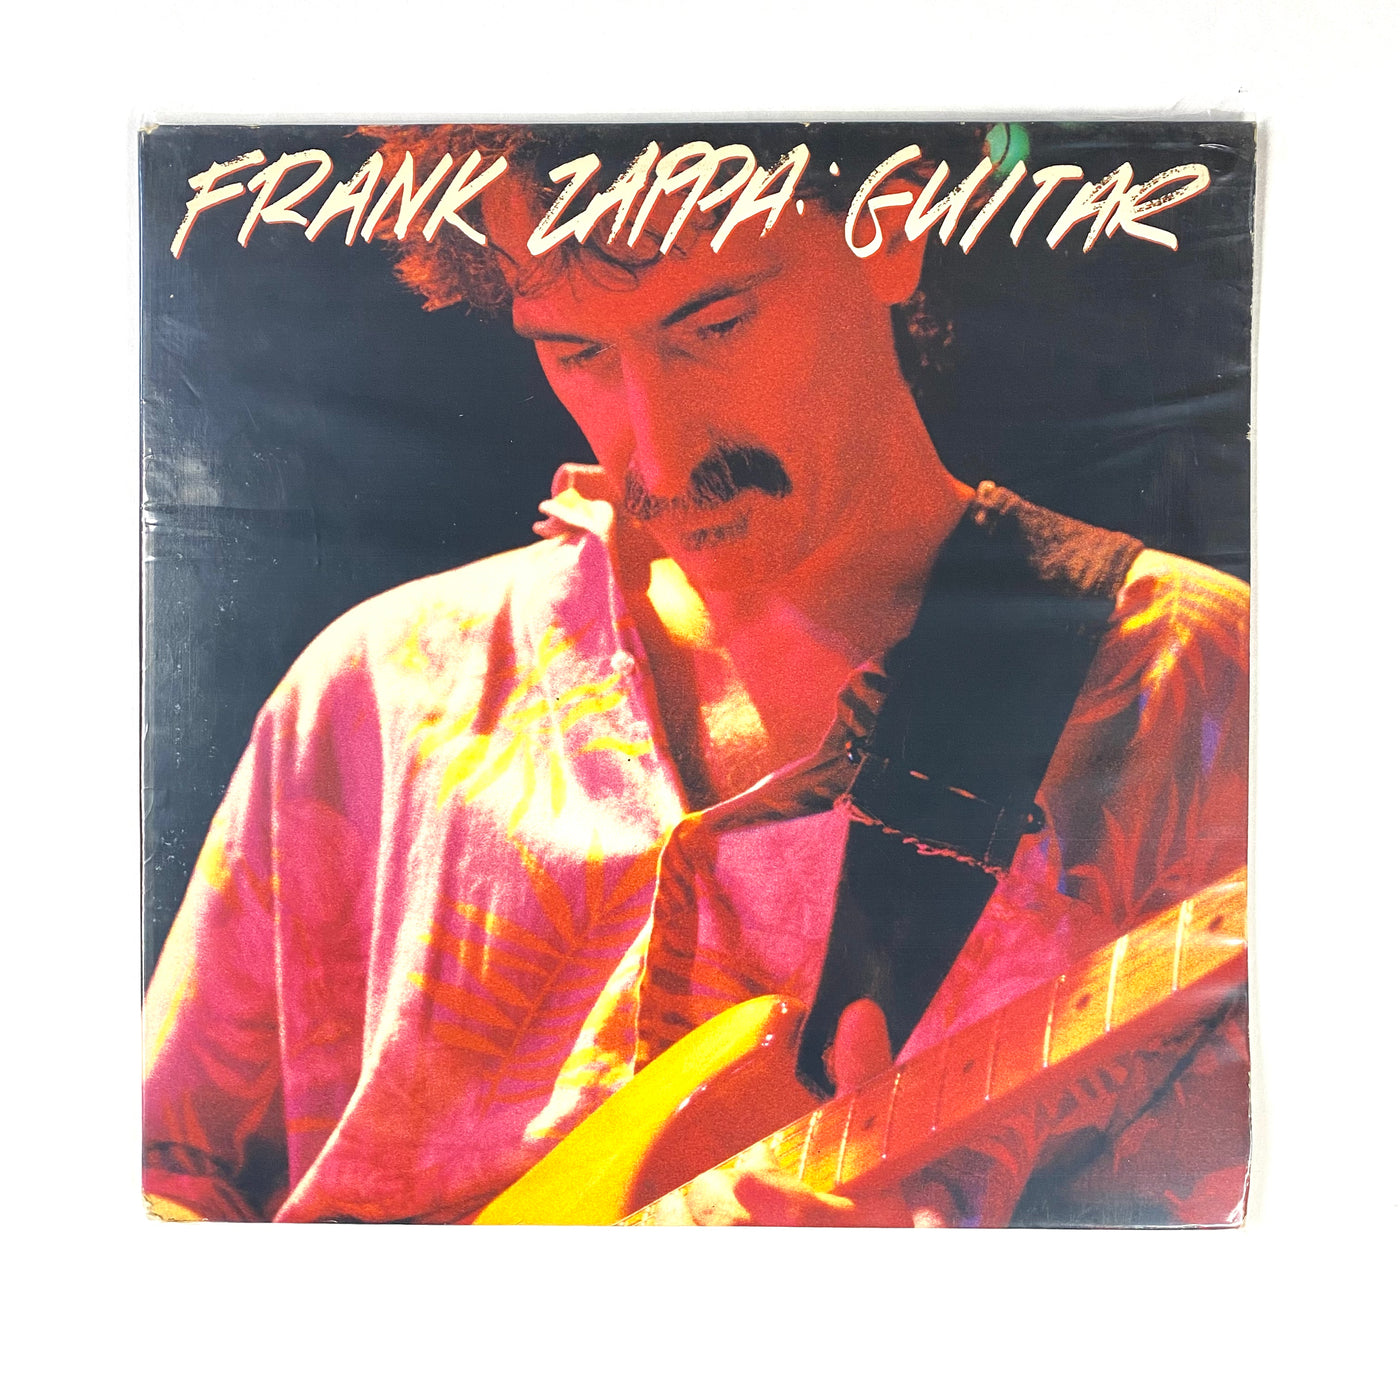 Frank Zappa - Guitar